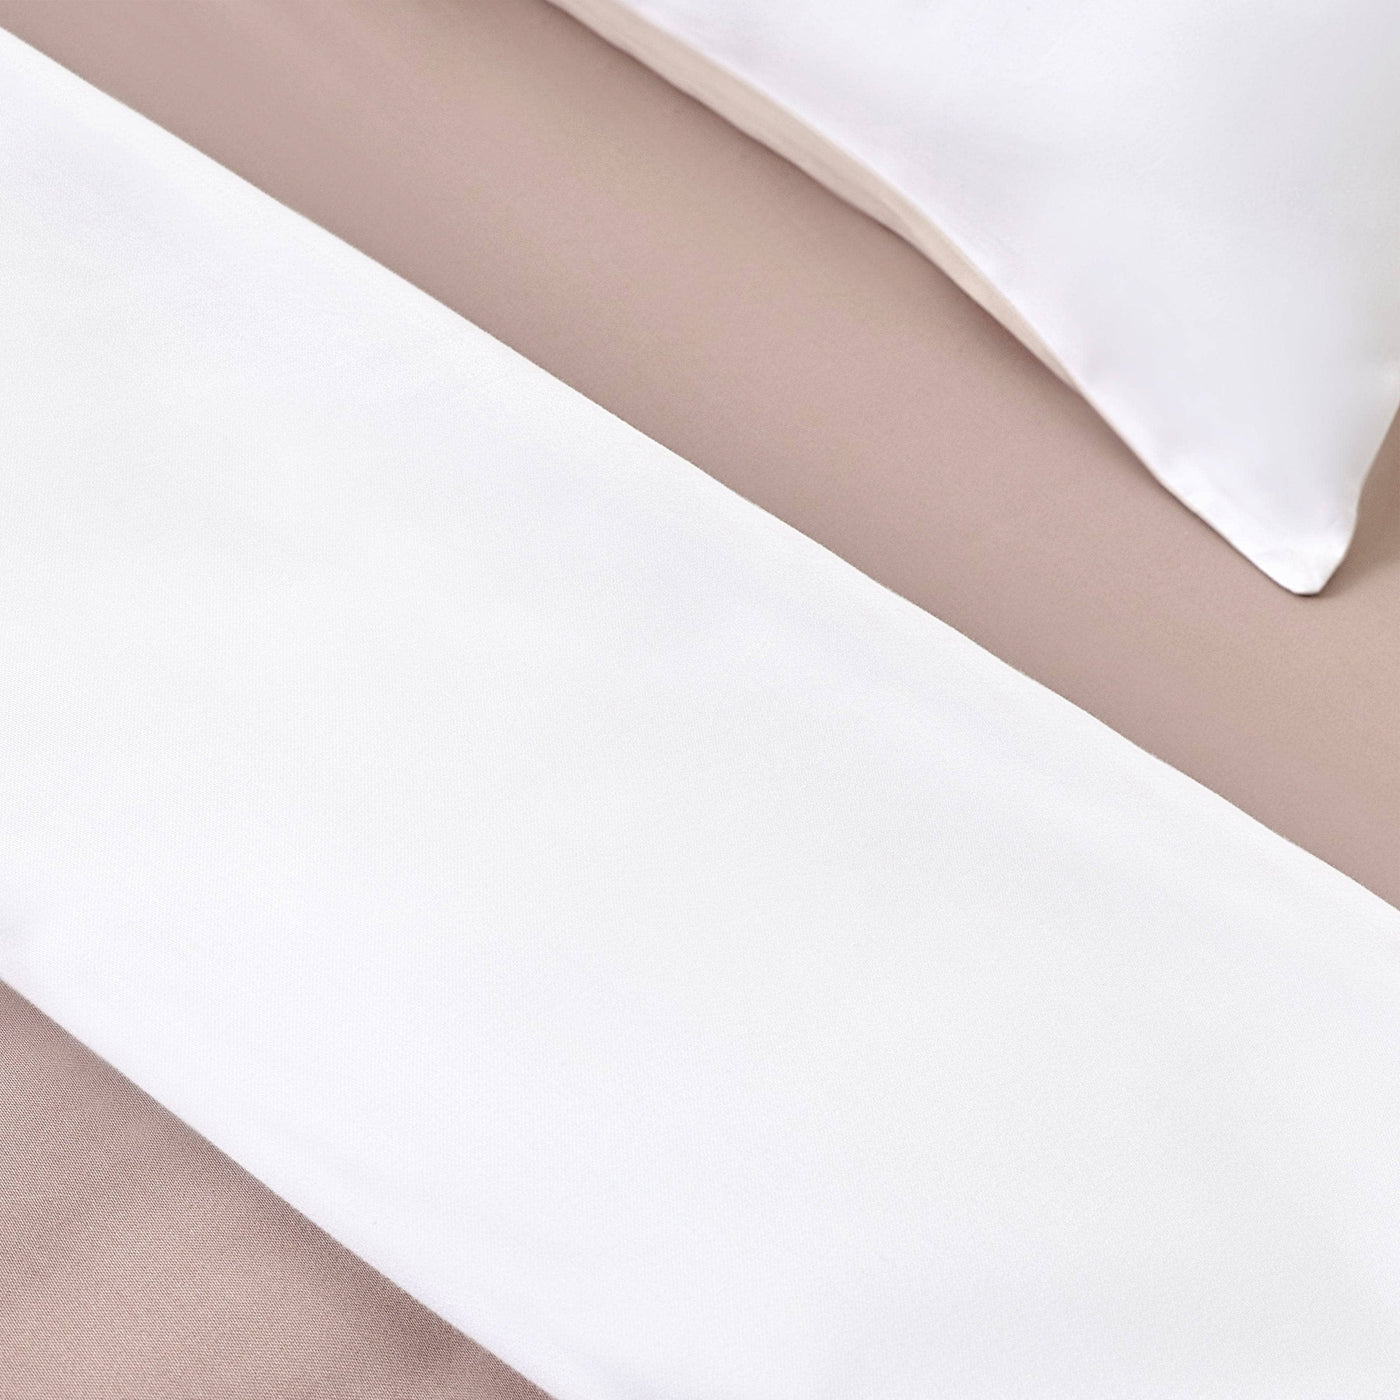 Charles 100% Turkish Cotton Sateen 210 TC Duvet Cover Set, Brown - Beige, Double Size Bedding Sets sazy.com